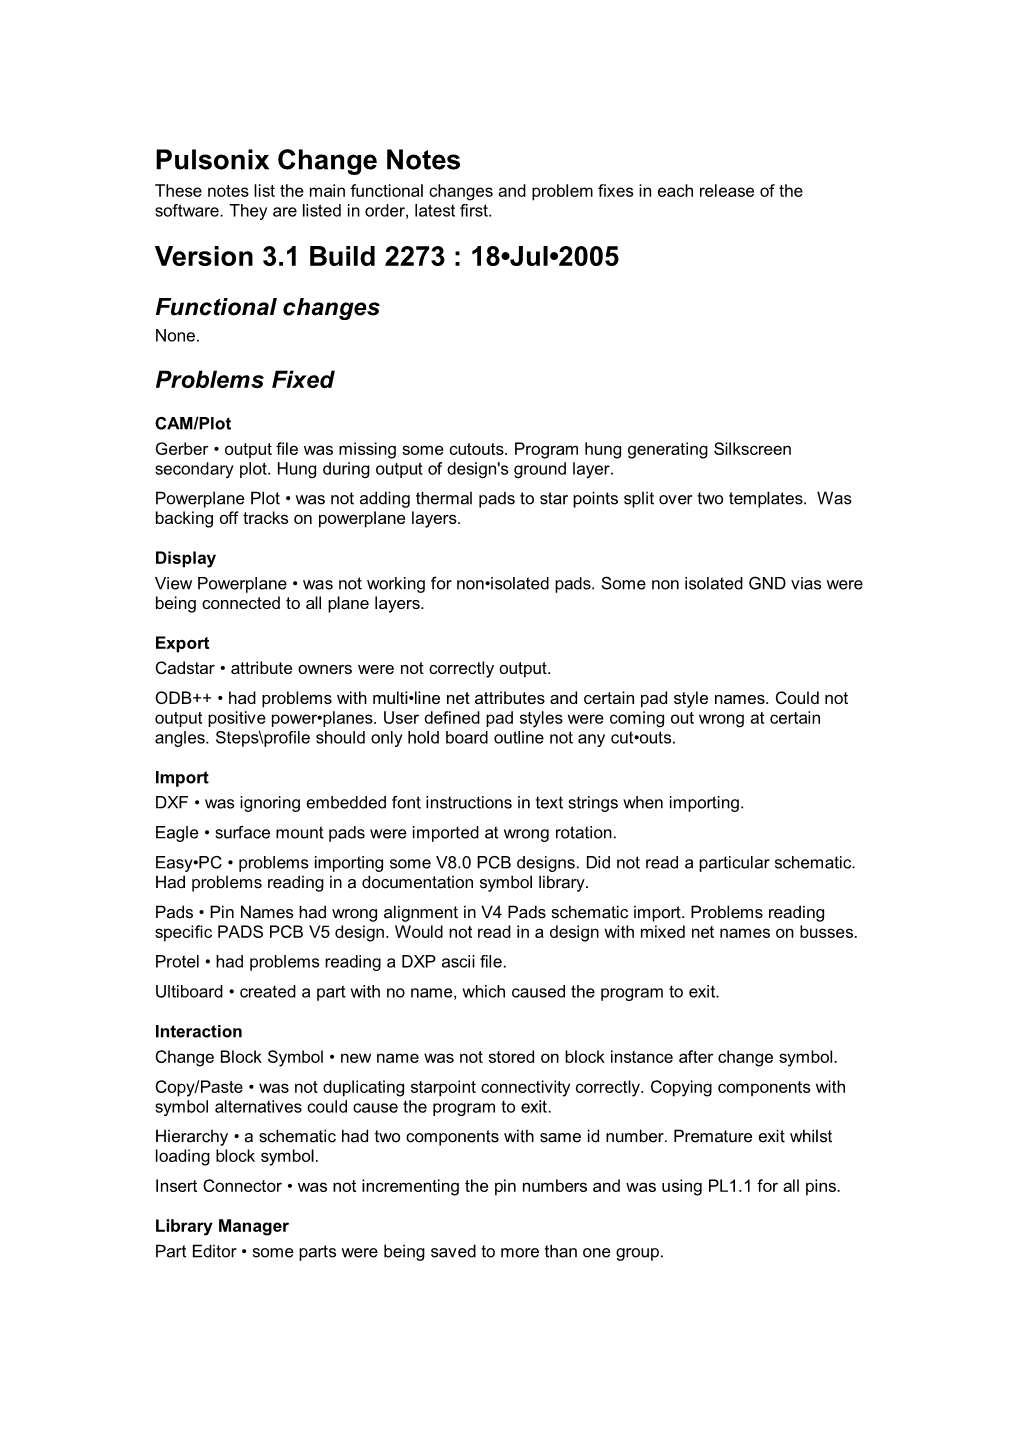 Pulsonix Change Notes Version 3.1 Build 2273 : 18-Jul-2005